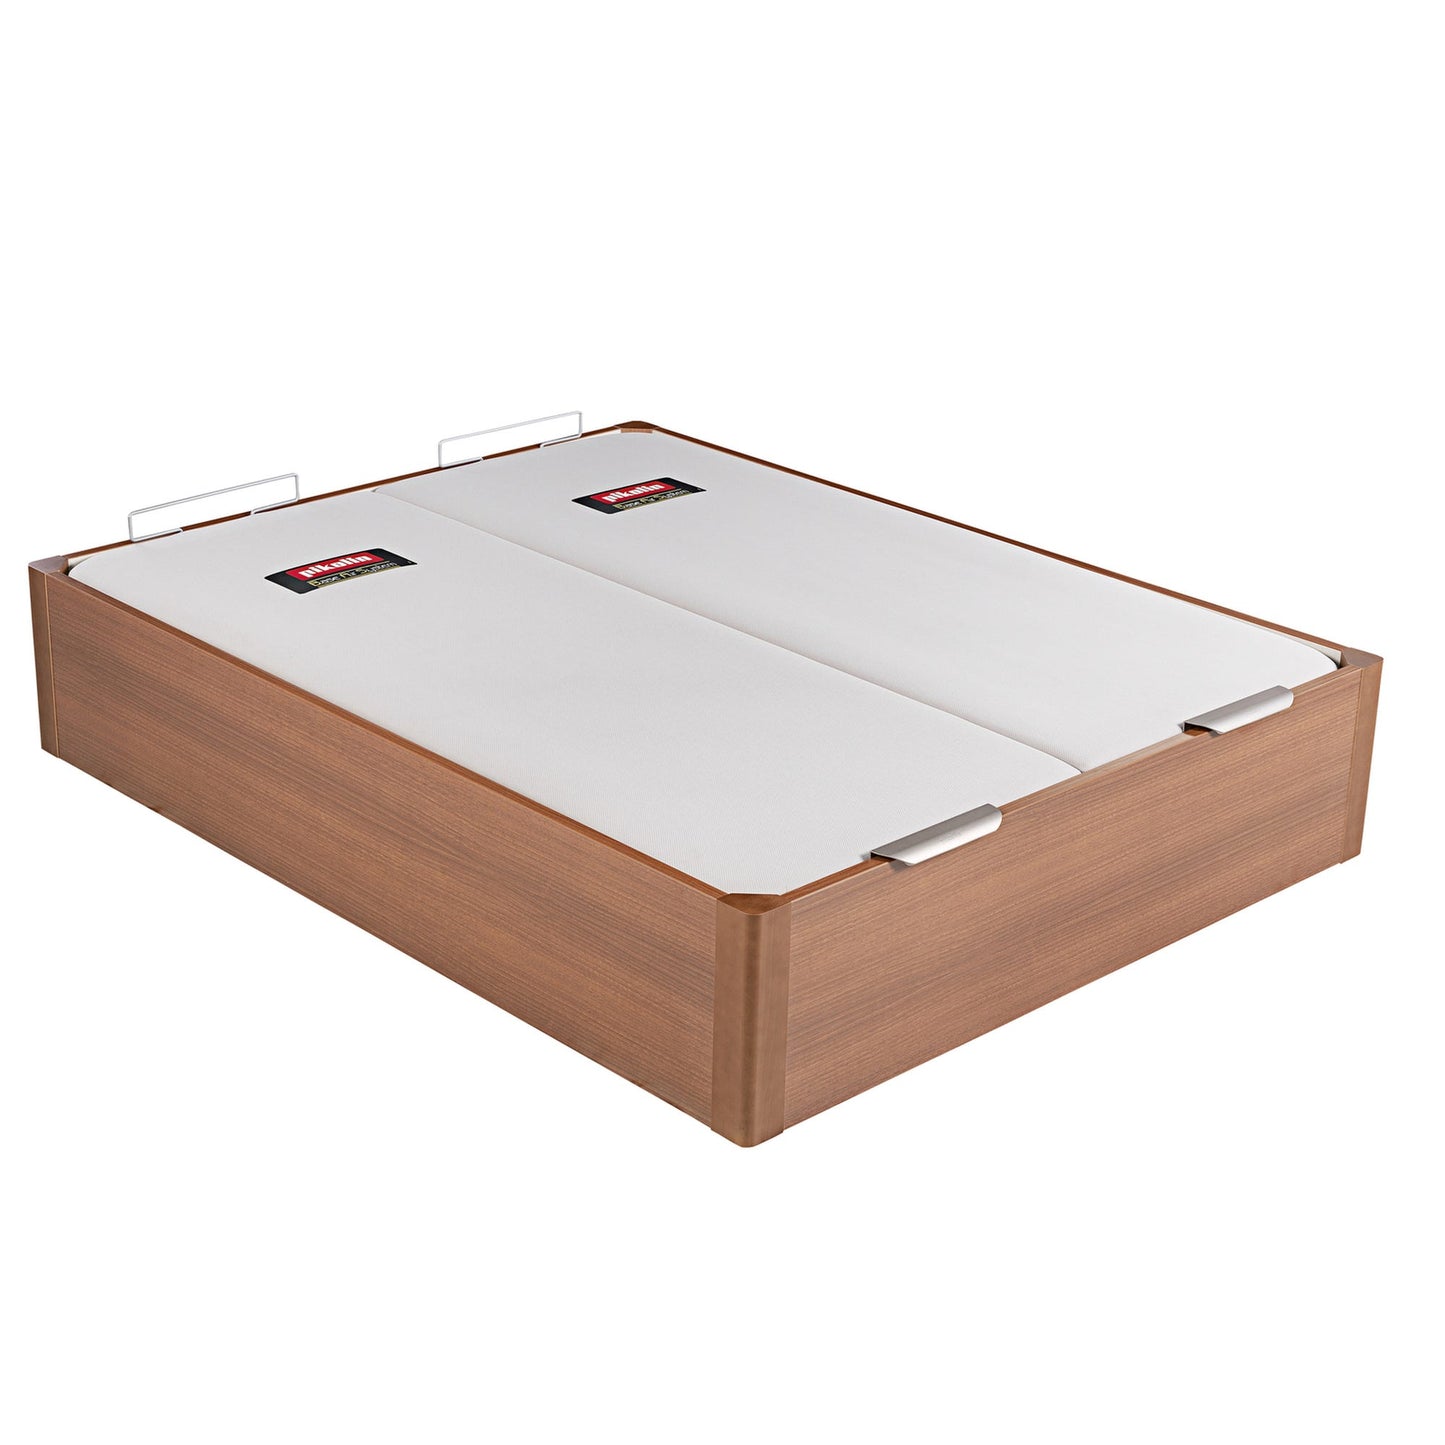 Canapé abatible de madera de alta capacidad tapa doble de color cerezo - DESIGN - 200x220